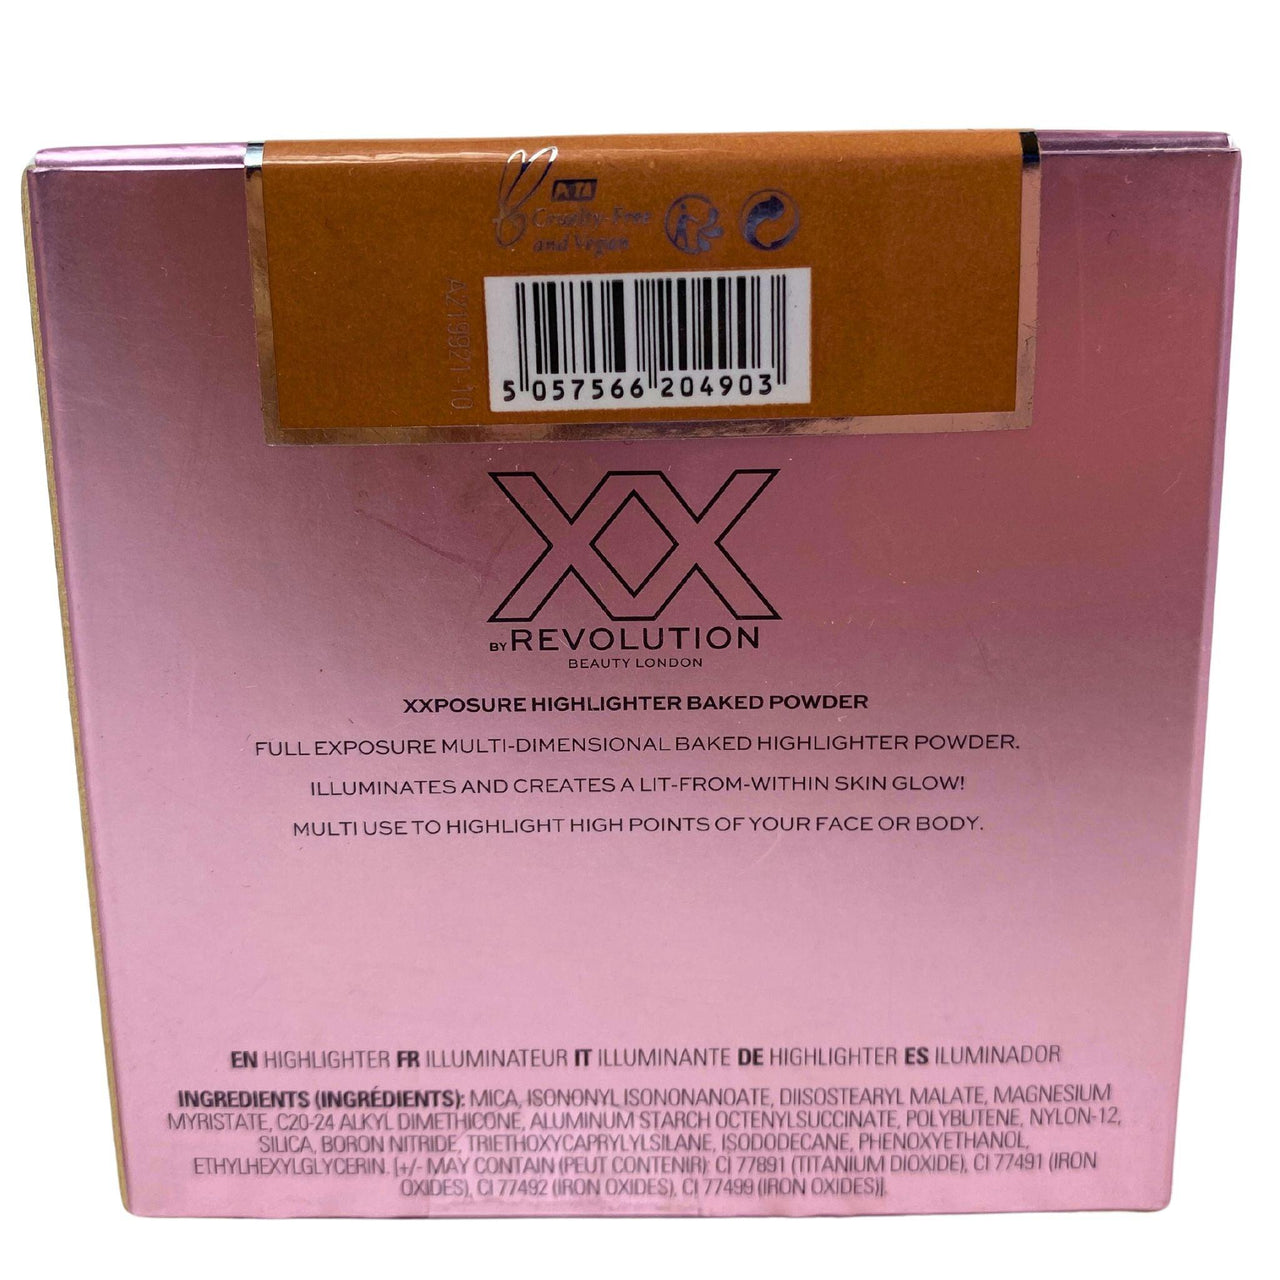 XX Revolution XXPOSURE Highlighter Powder (42 Pcs lot) - Discount Wholesalers Inc